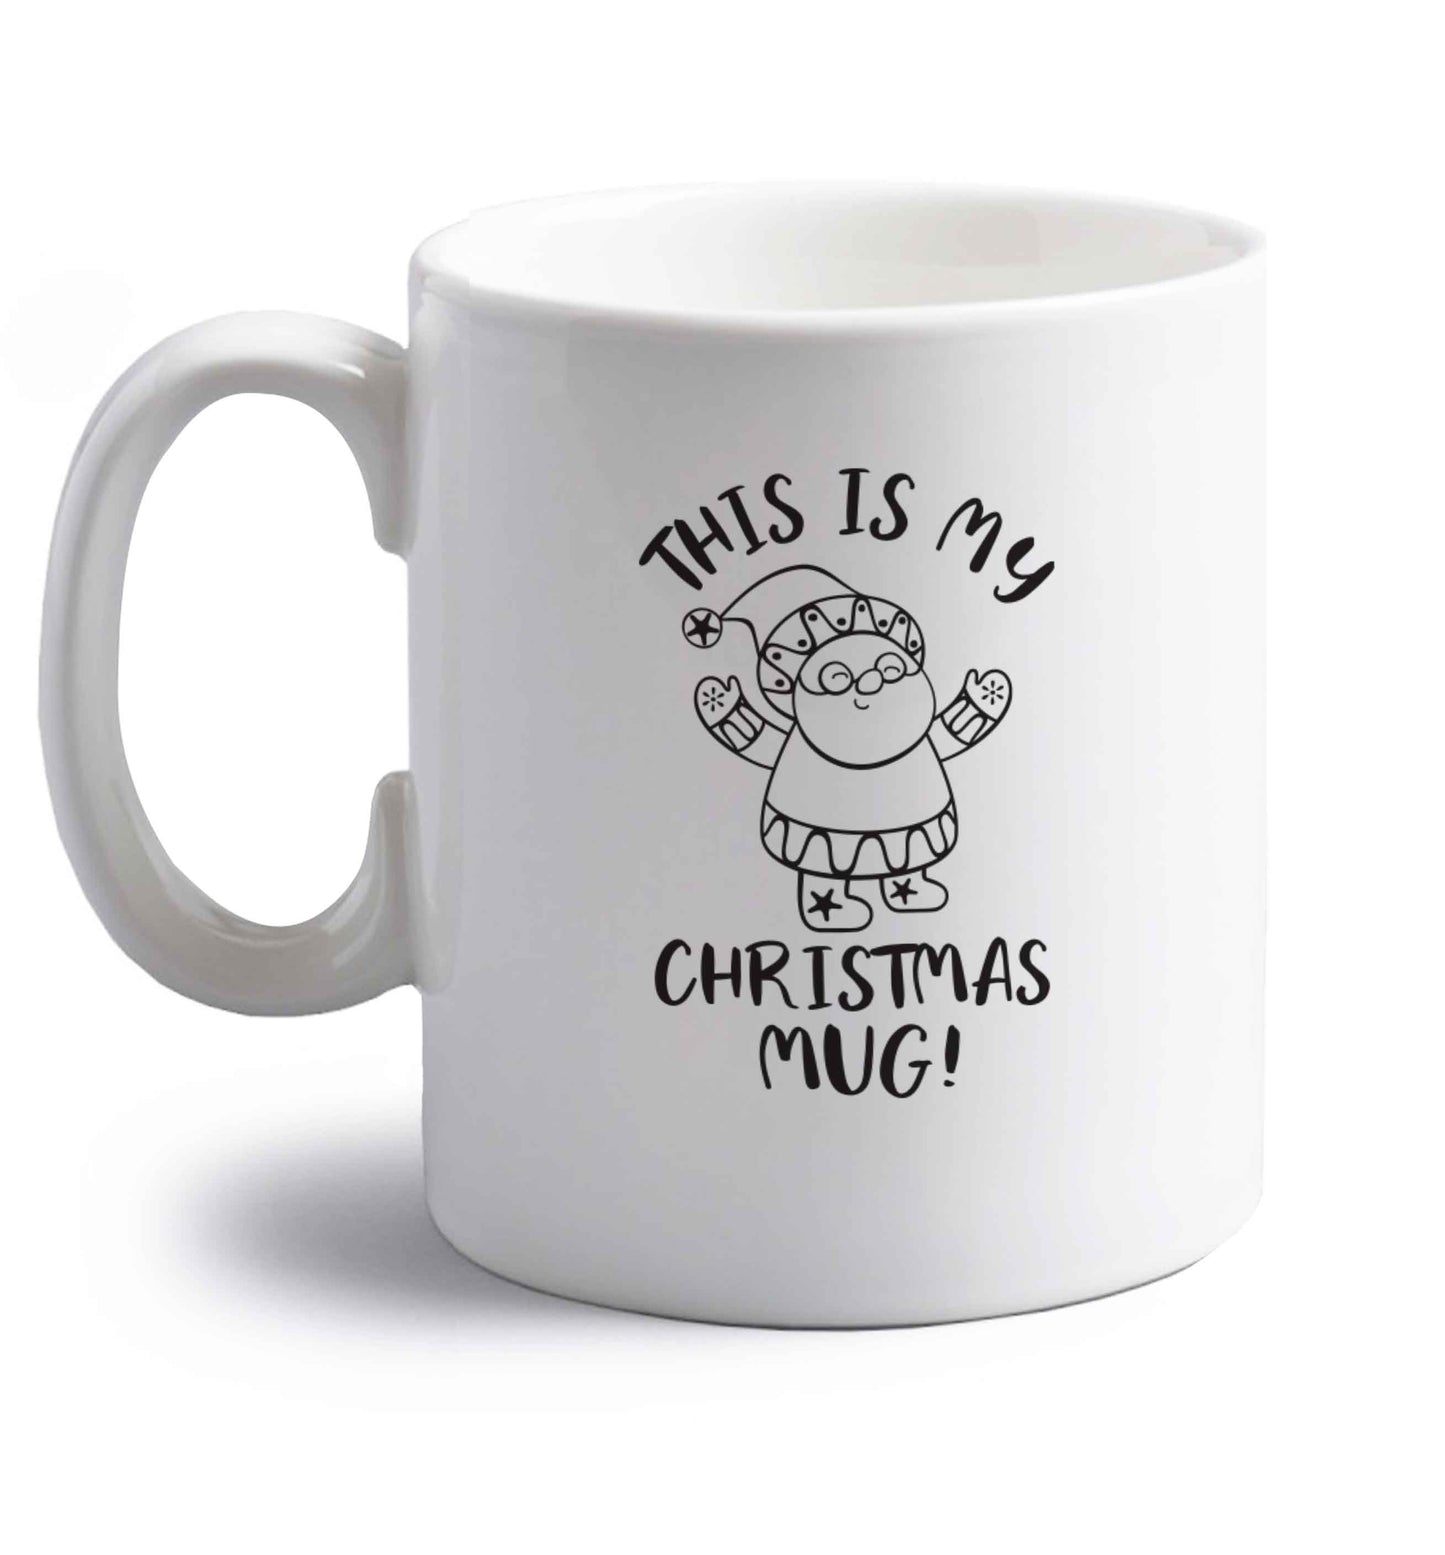 This is my Christmas mug right handed white ceramic mug 